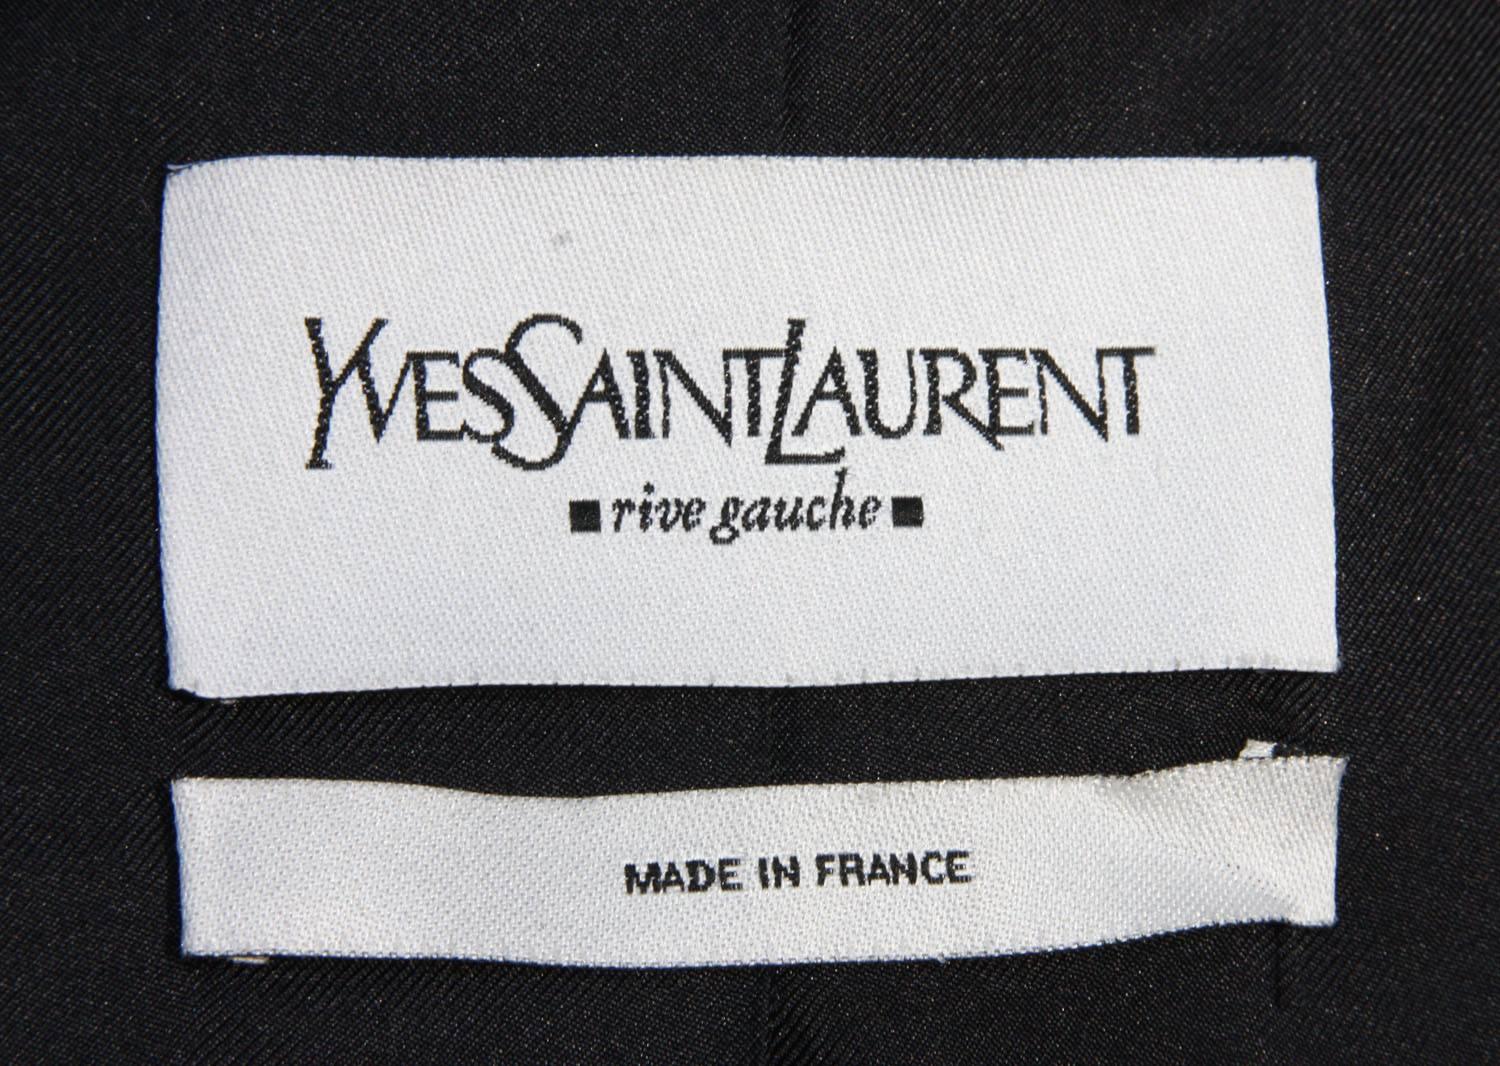  Tom Ford for Yves Saint Laurent F/W 2004 Chinoiserie Tuxedo Jacket Fr.42  US 10 For Sale 2